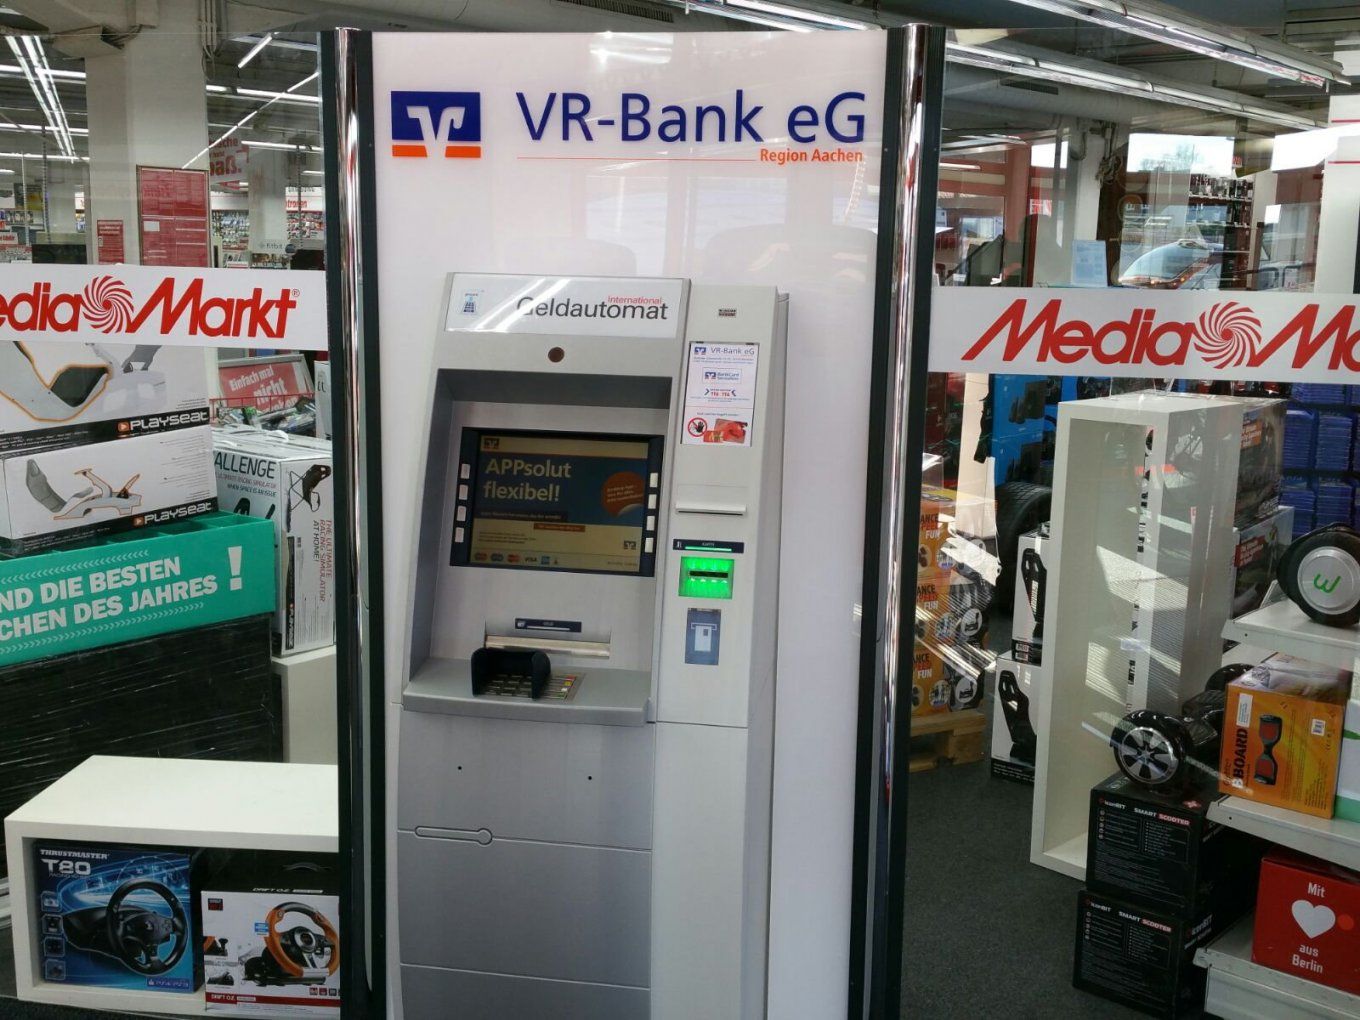 Vrbank Eg  Region Aachen Geldautomat Im Media Markt  Banken von Vr Bank Eg Region Aachen Hauptstelle Würselen Bild